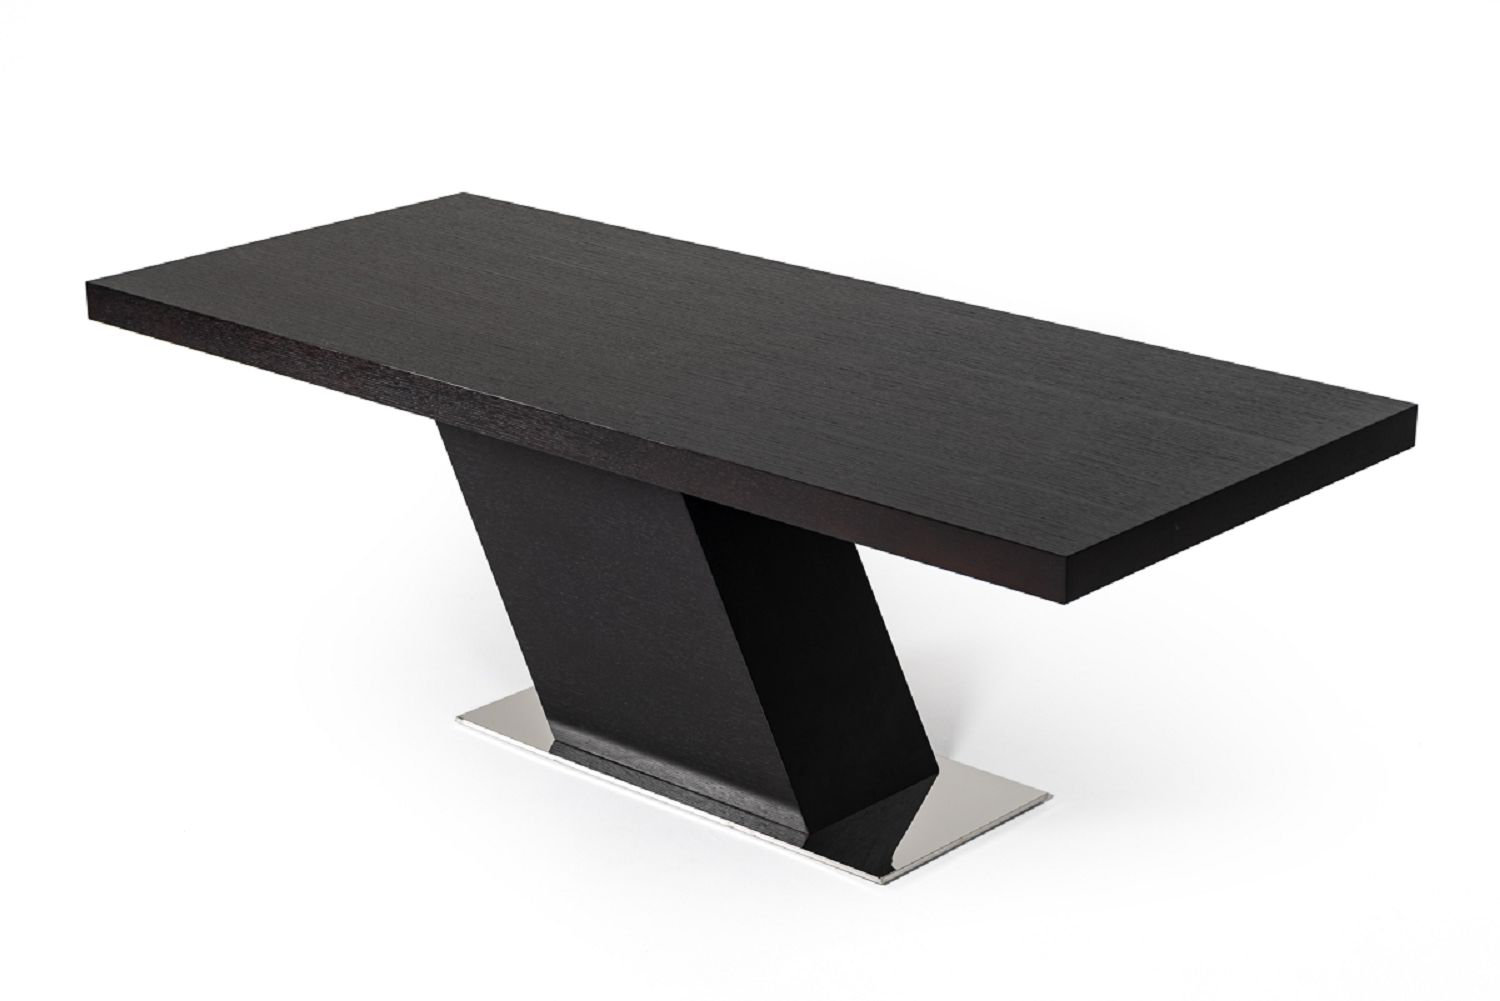 Orren Ellis Clower Pedestal Rectangular Dining Table Wayfair Ca